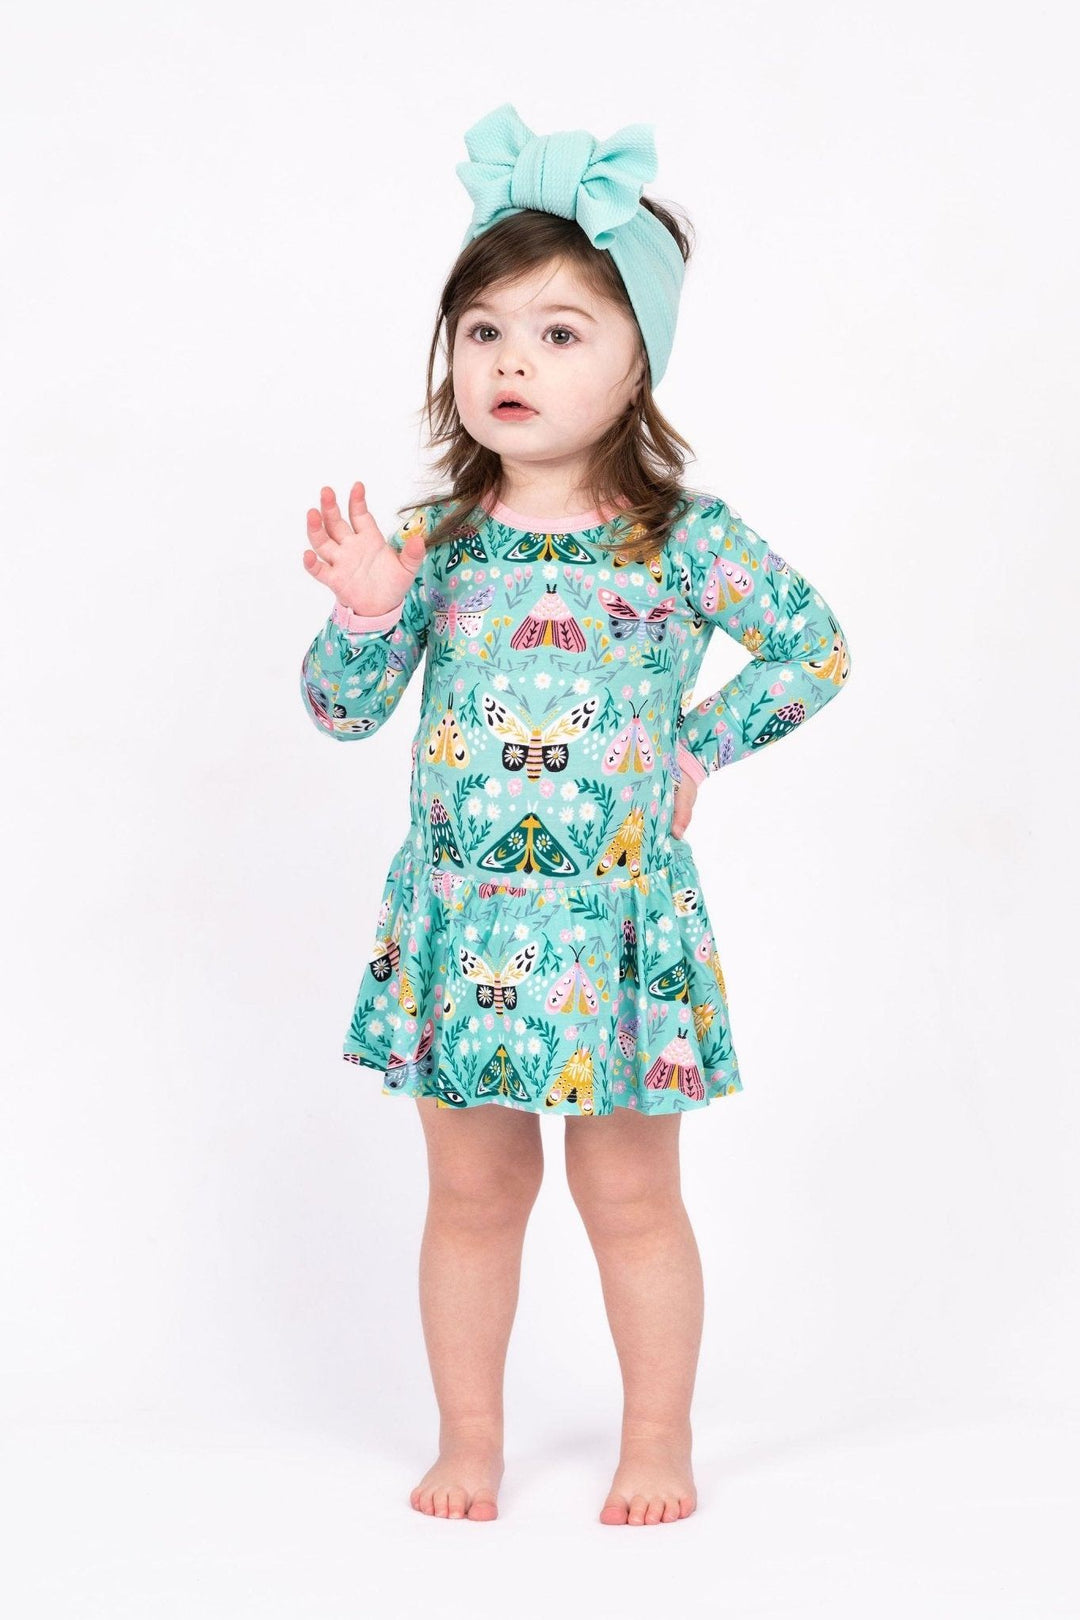 Moth Print Bamboo Ruffle Dress Bodysuit for Babies - Sophia Rose Children's Boutique